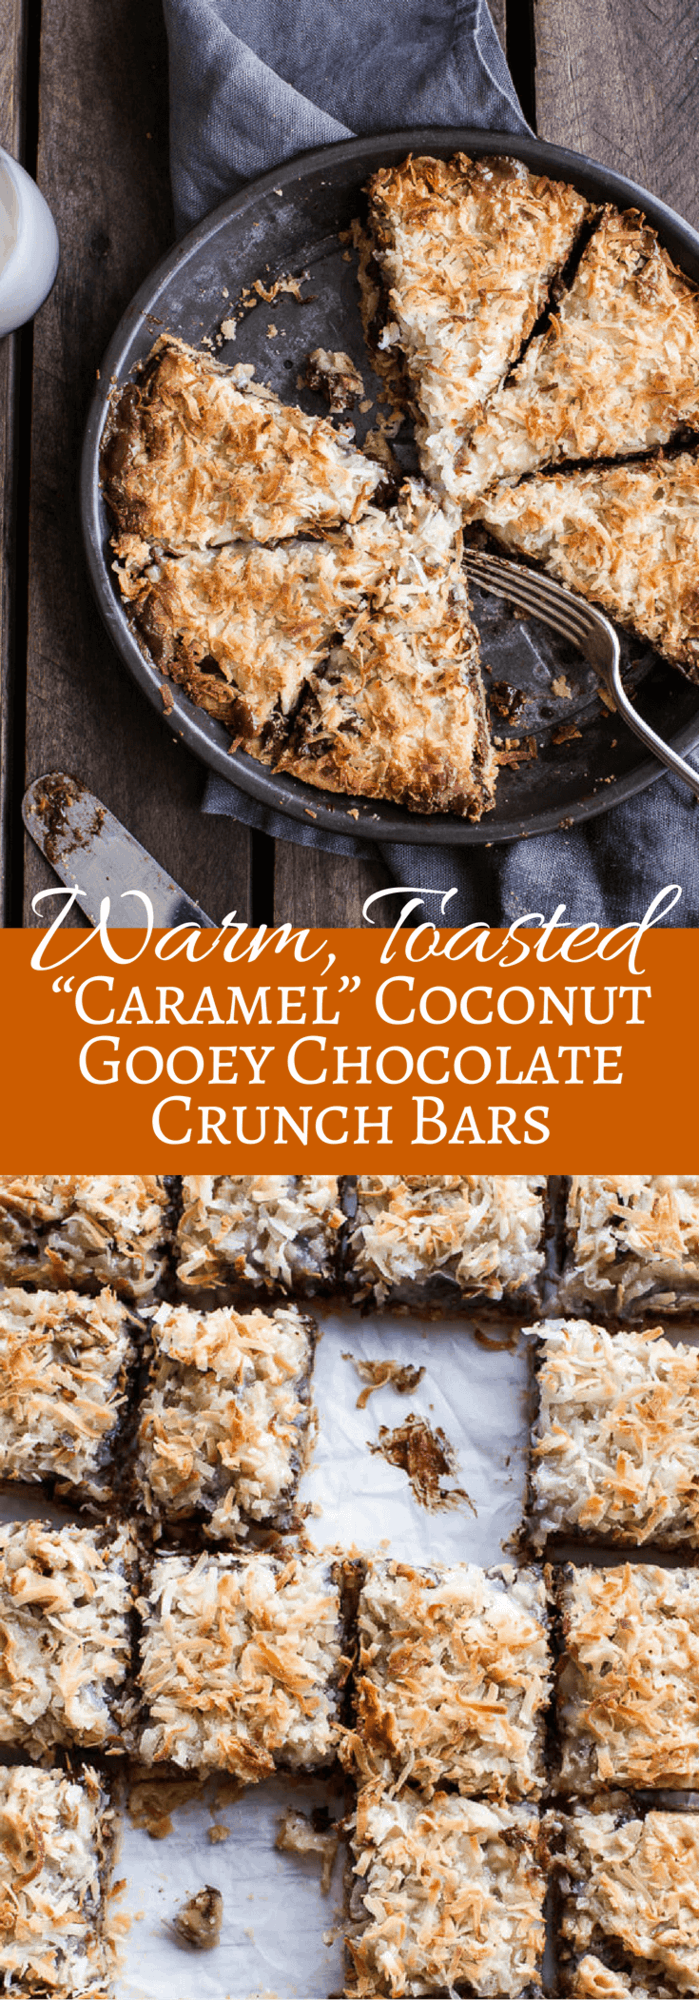 Warm, Toasted Caramel Coconut Gooey Chocolate Crunch Bars | halfbakedharvest.com @hbharvest